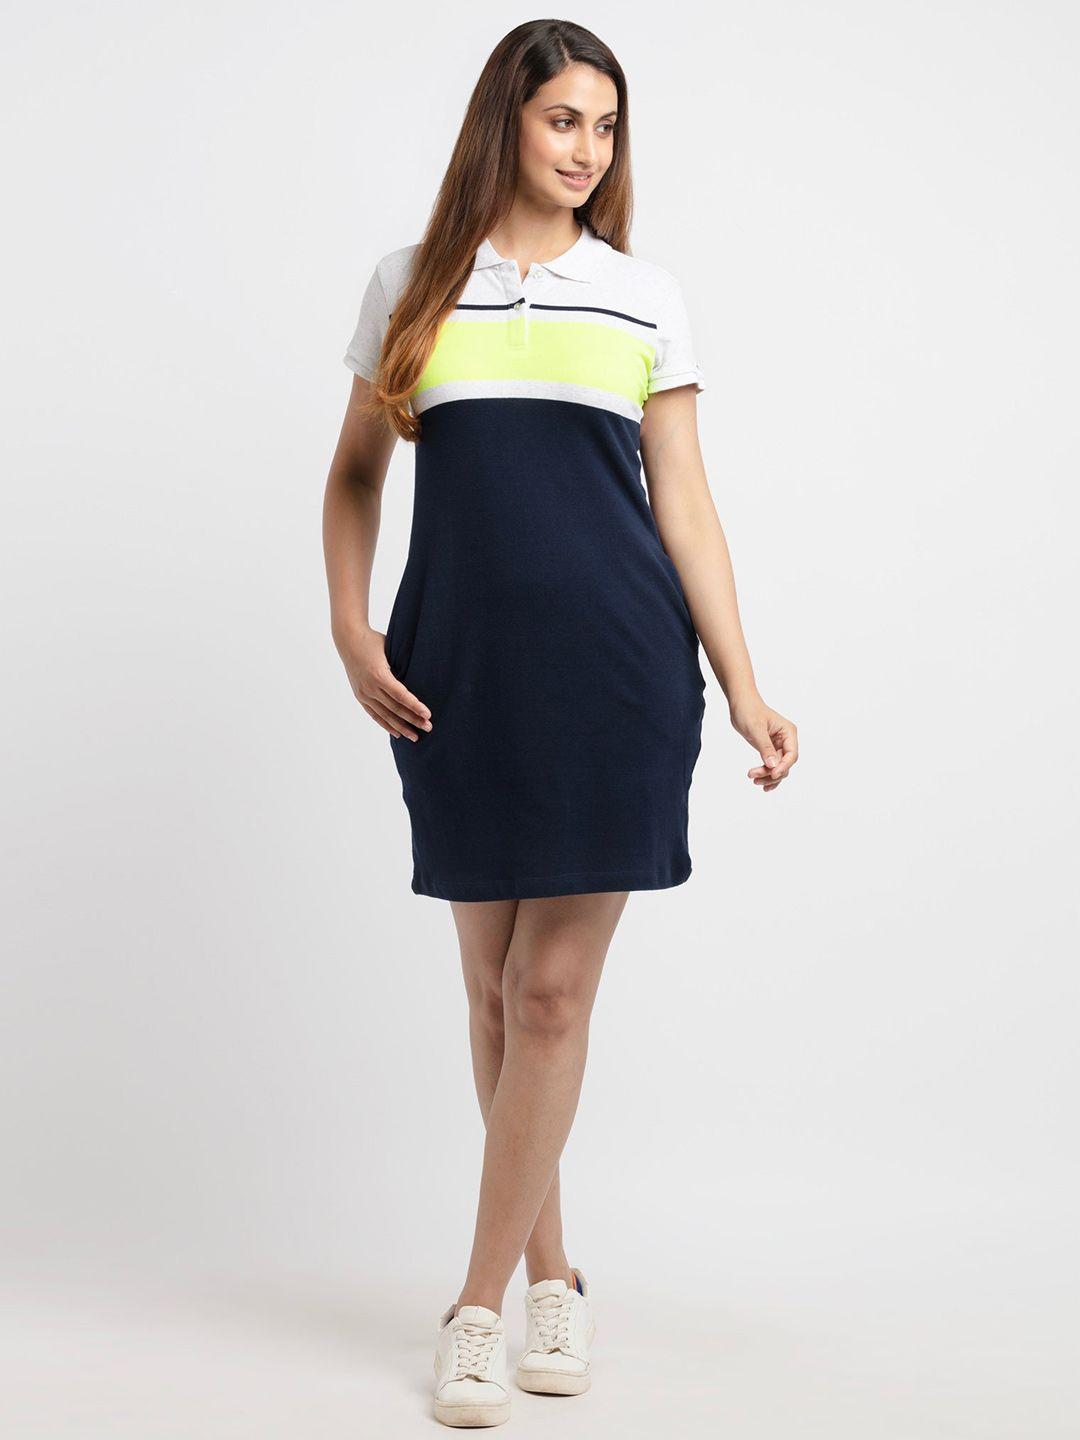 status quo women navy blue & yellow colourblocked cotton t-shirt dress